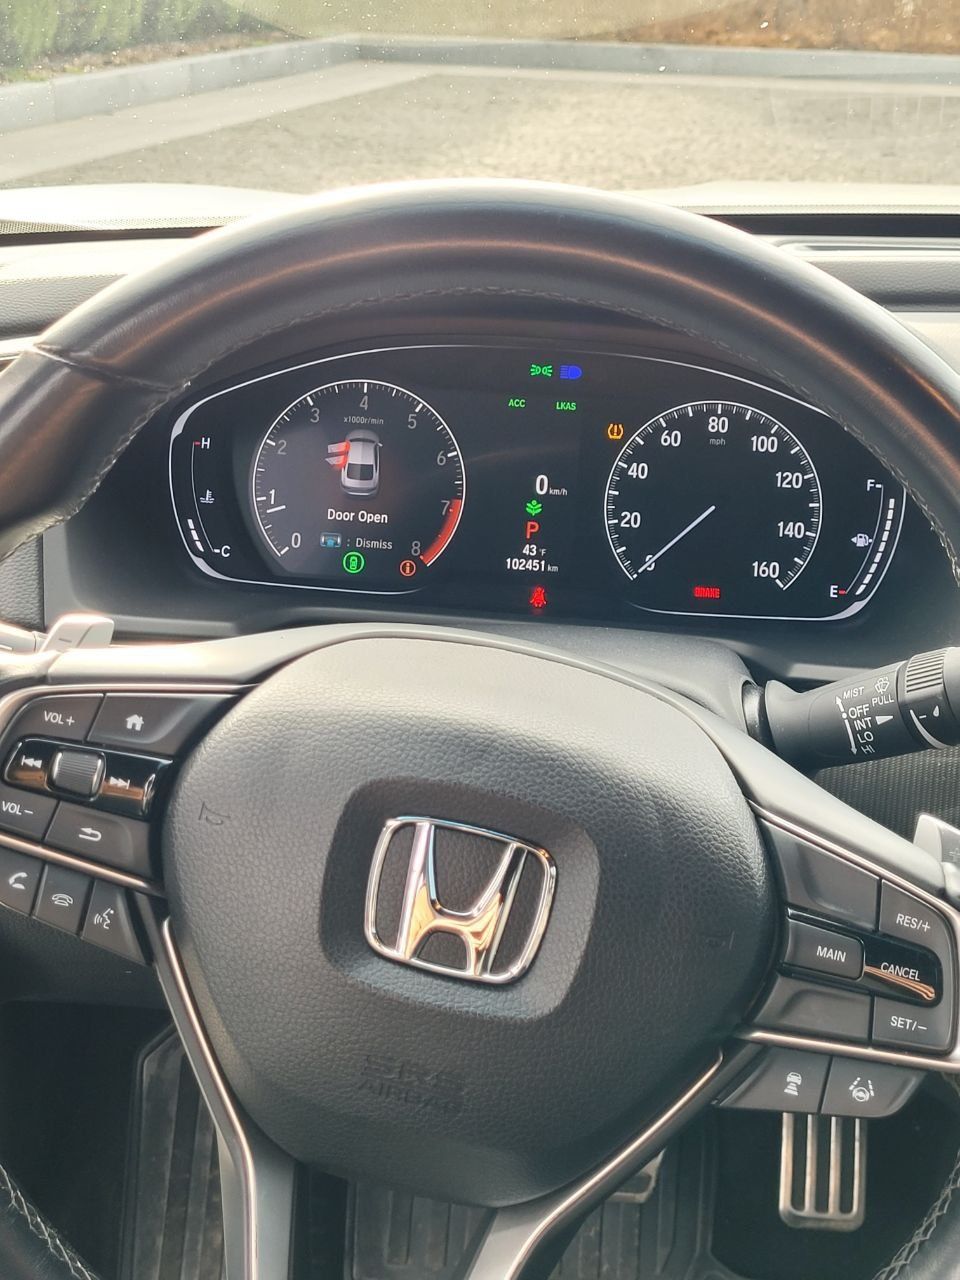 Honda Accord X 2.0 Turbo 252к.с.
2.0T в комплектації Sport
(не плутайт